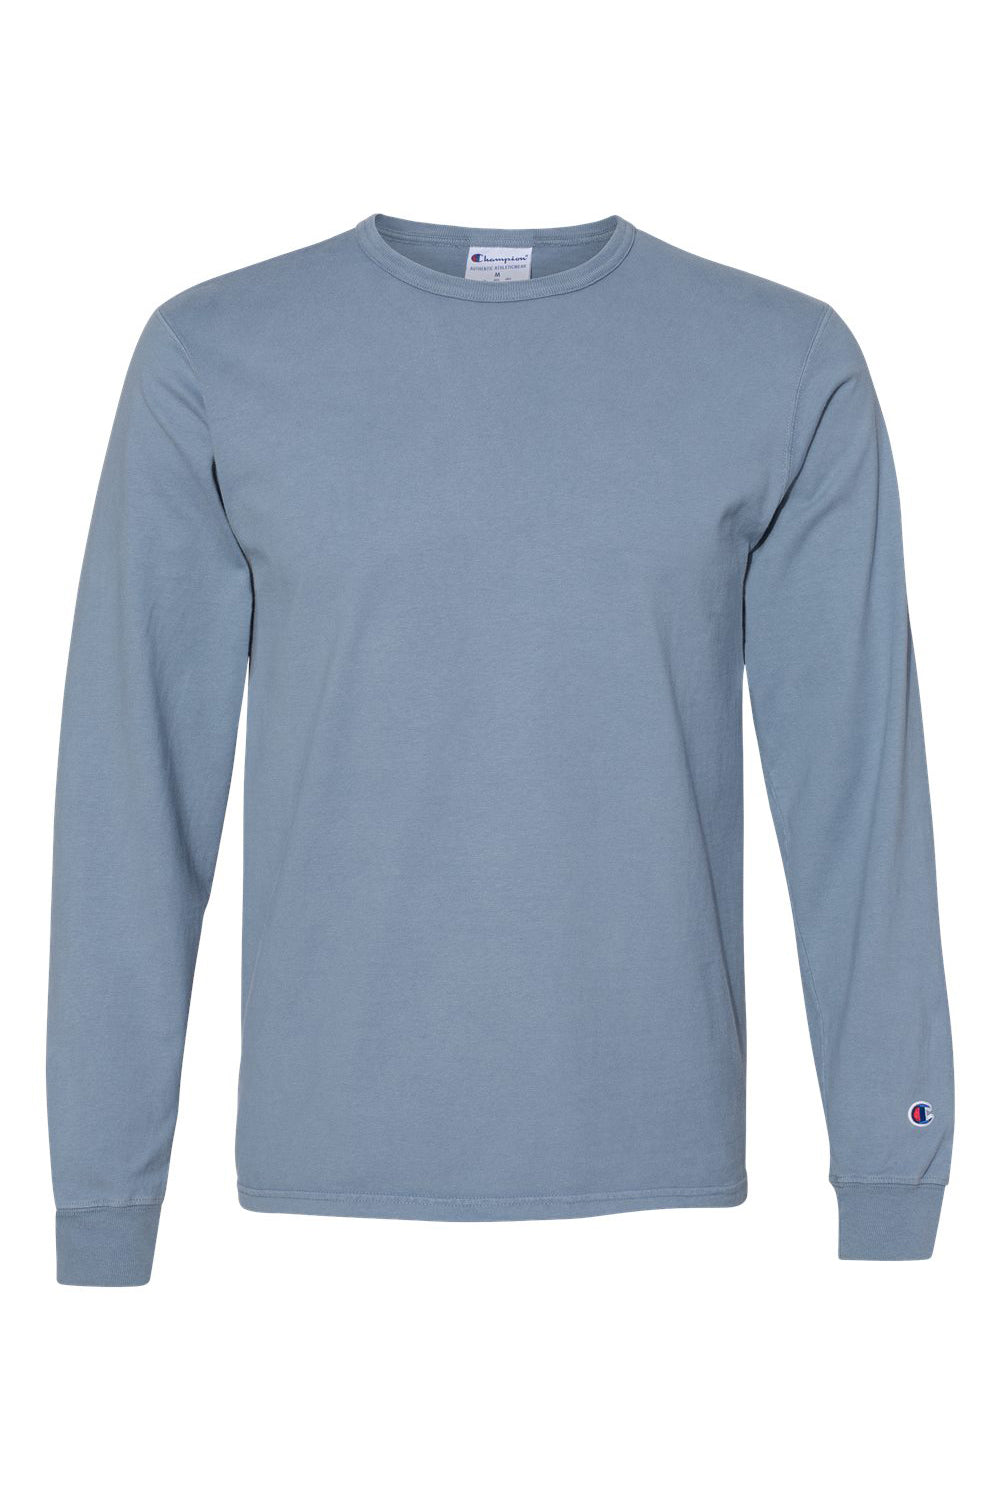 Champion CD200 Mens Garment Dyed Long Sleeve Crewneck T-Shirt Saltwater Blue Flat Front